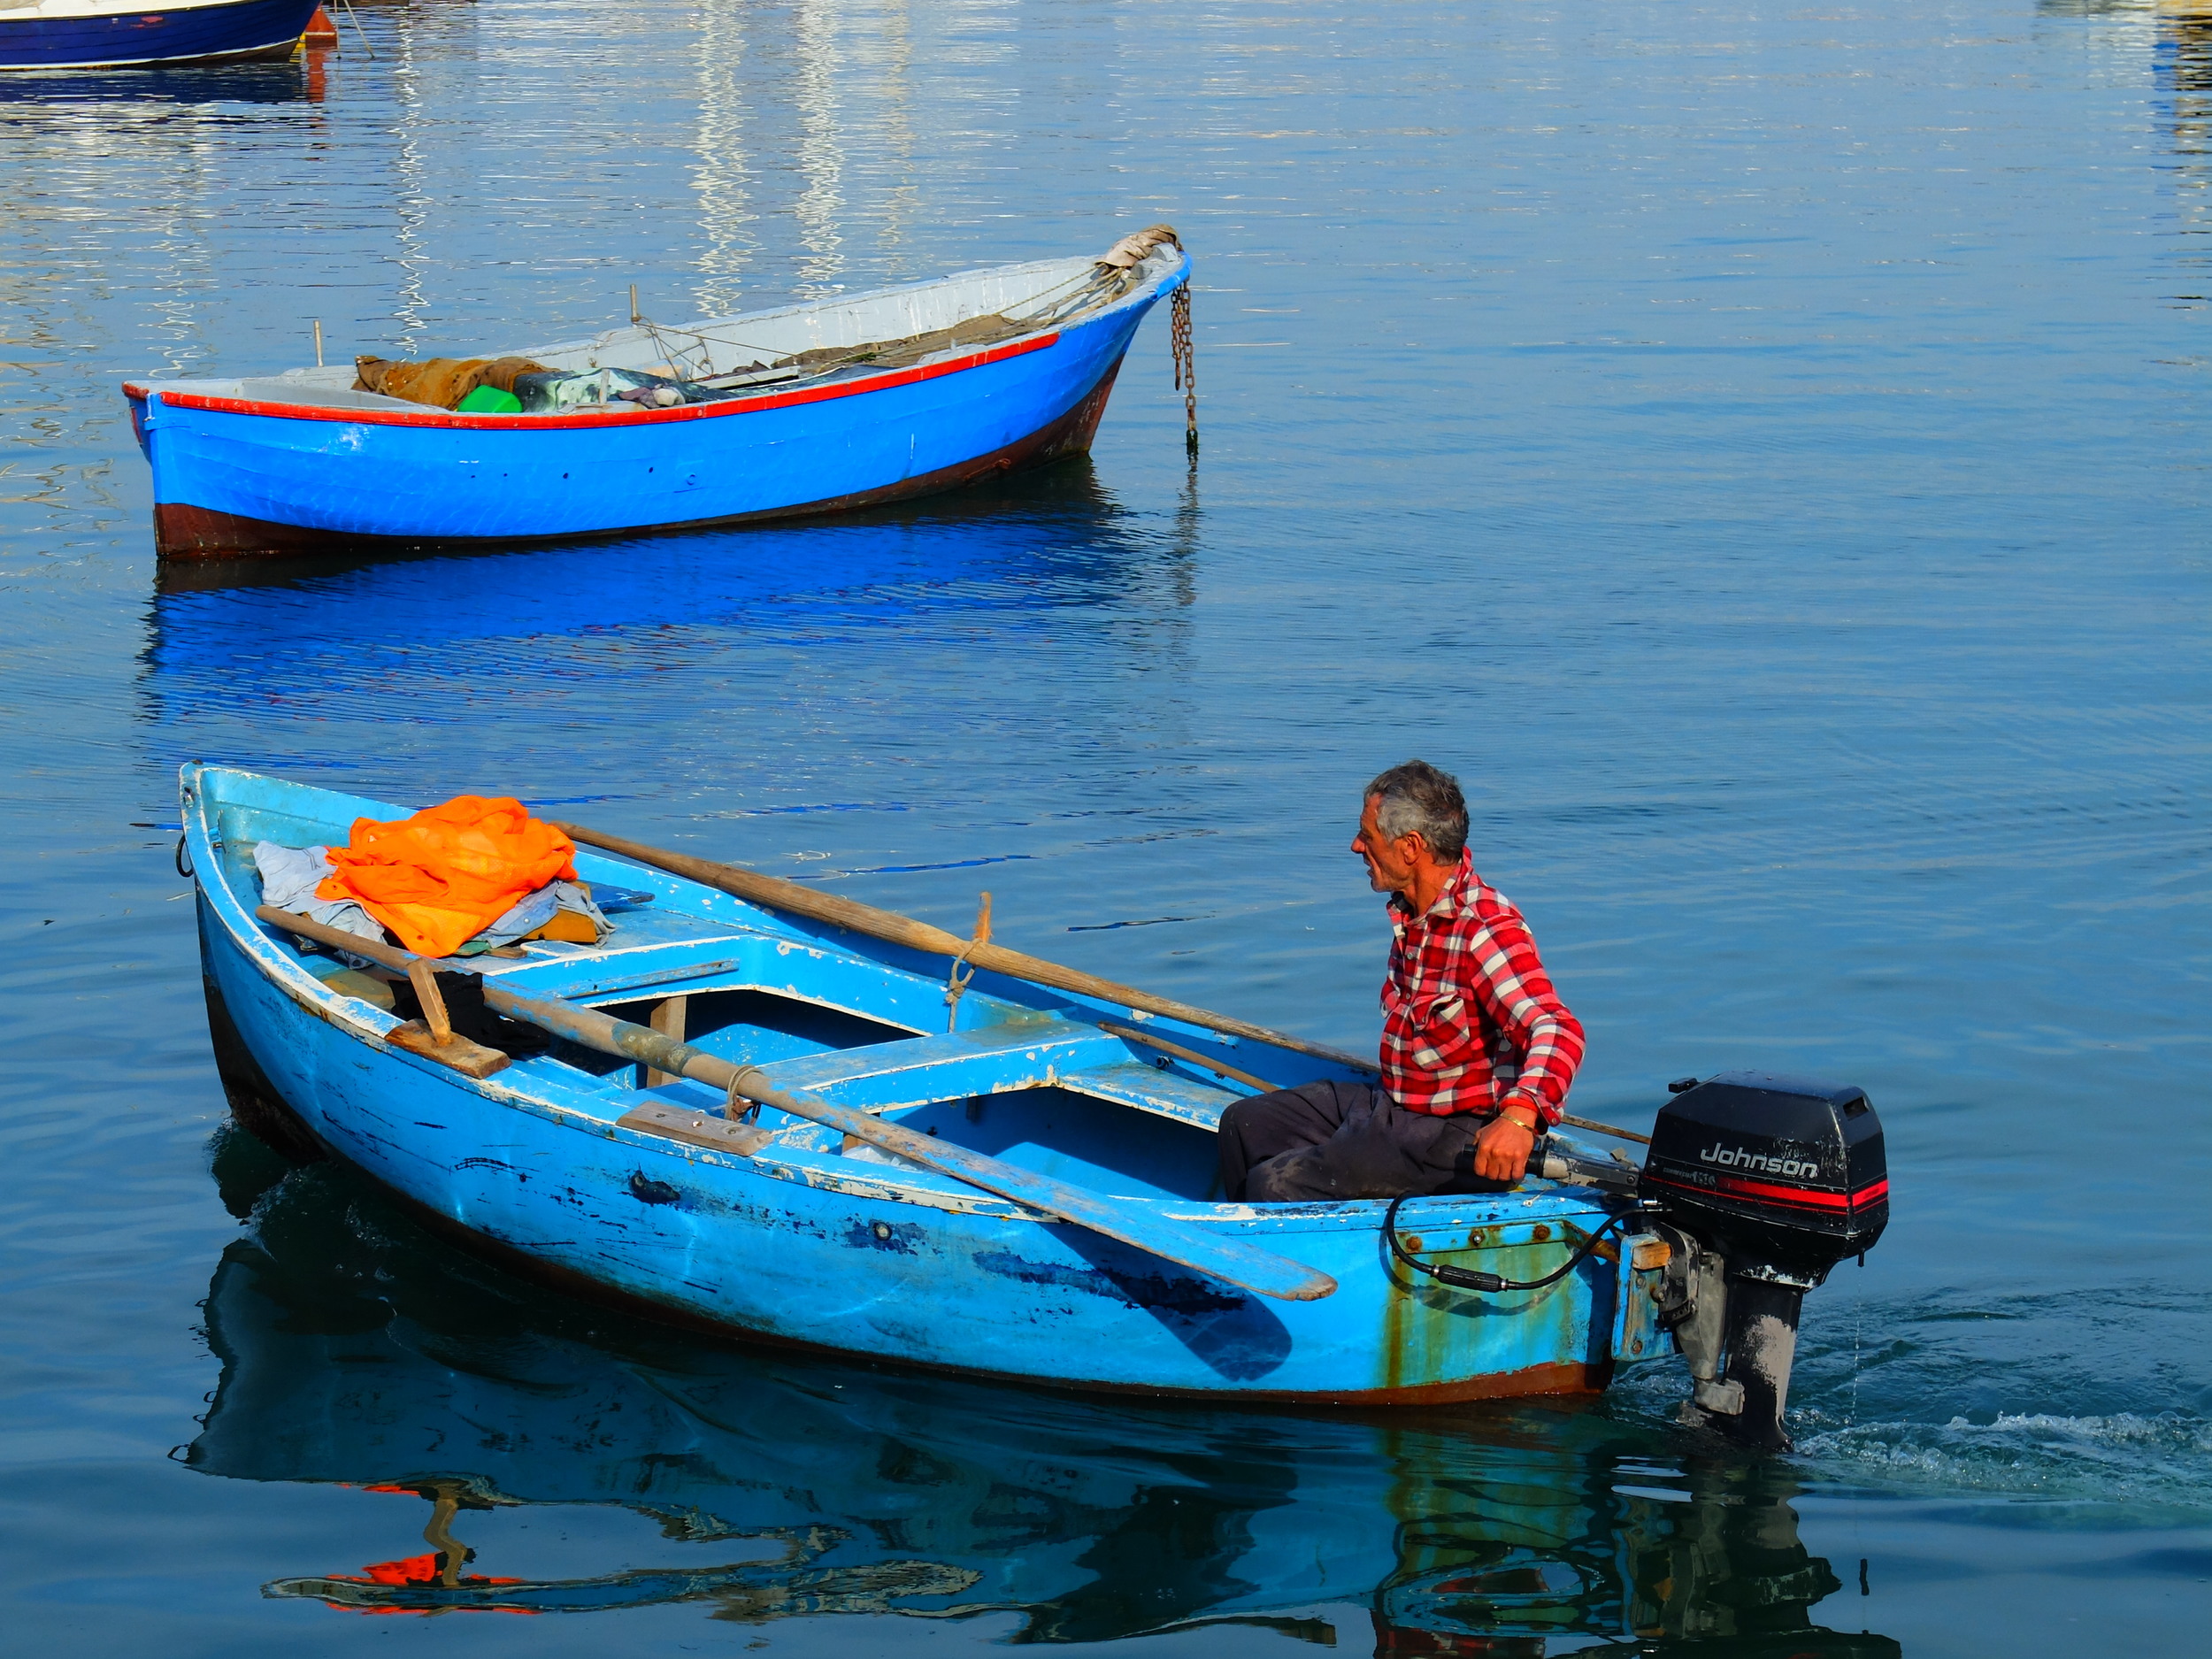 Fisherman on placid waters, Bari, Italy